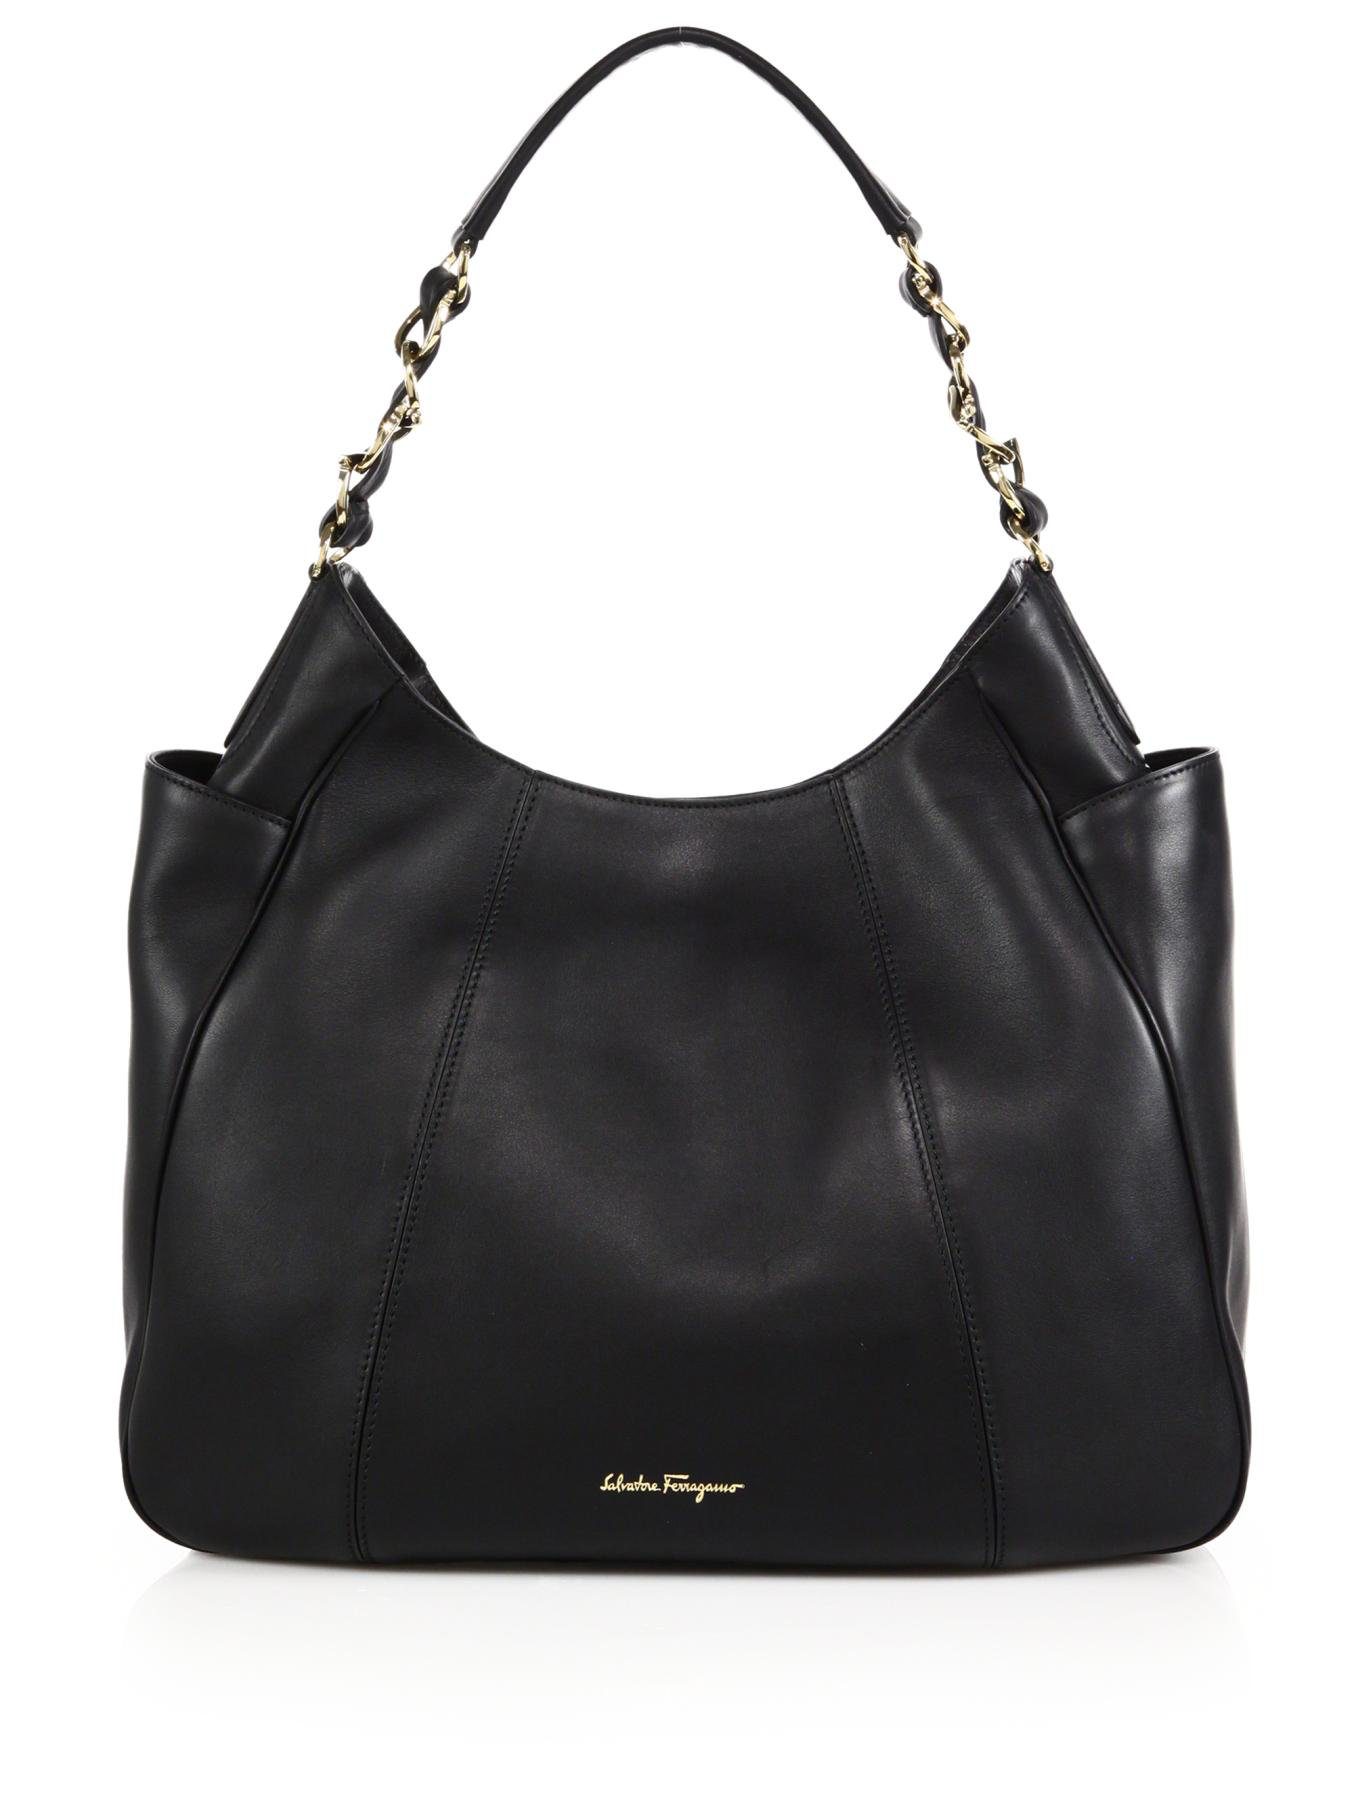 Lyst - Ferragamo Elle Leather Hobo Bag in Black